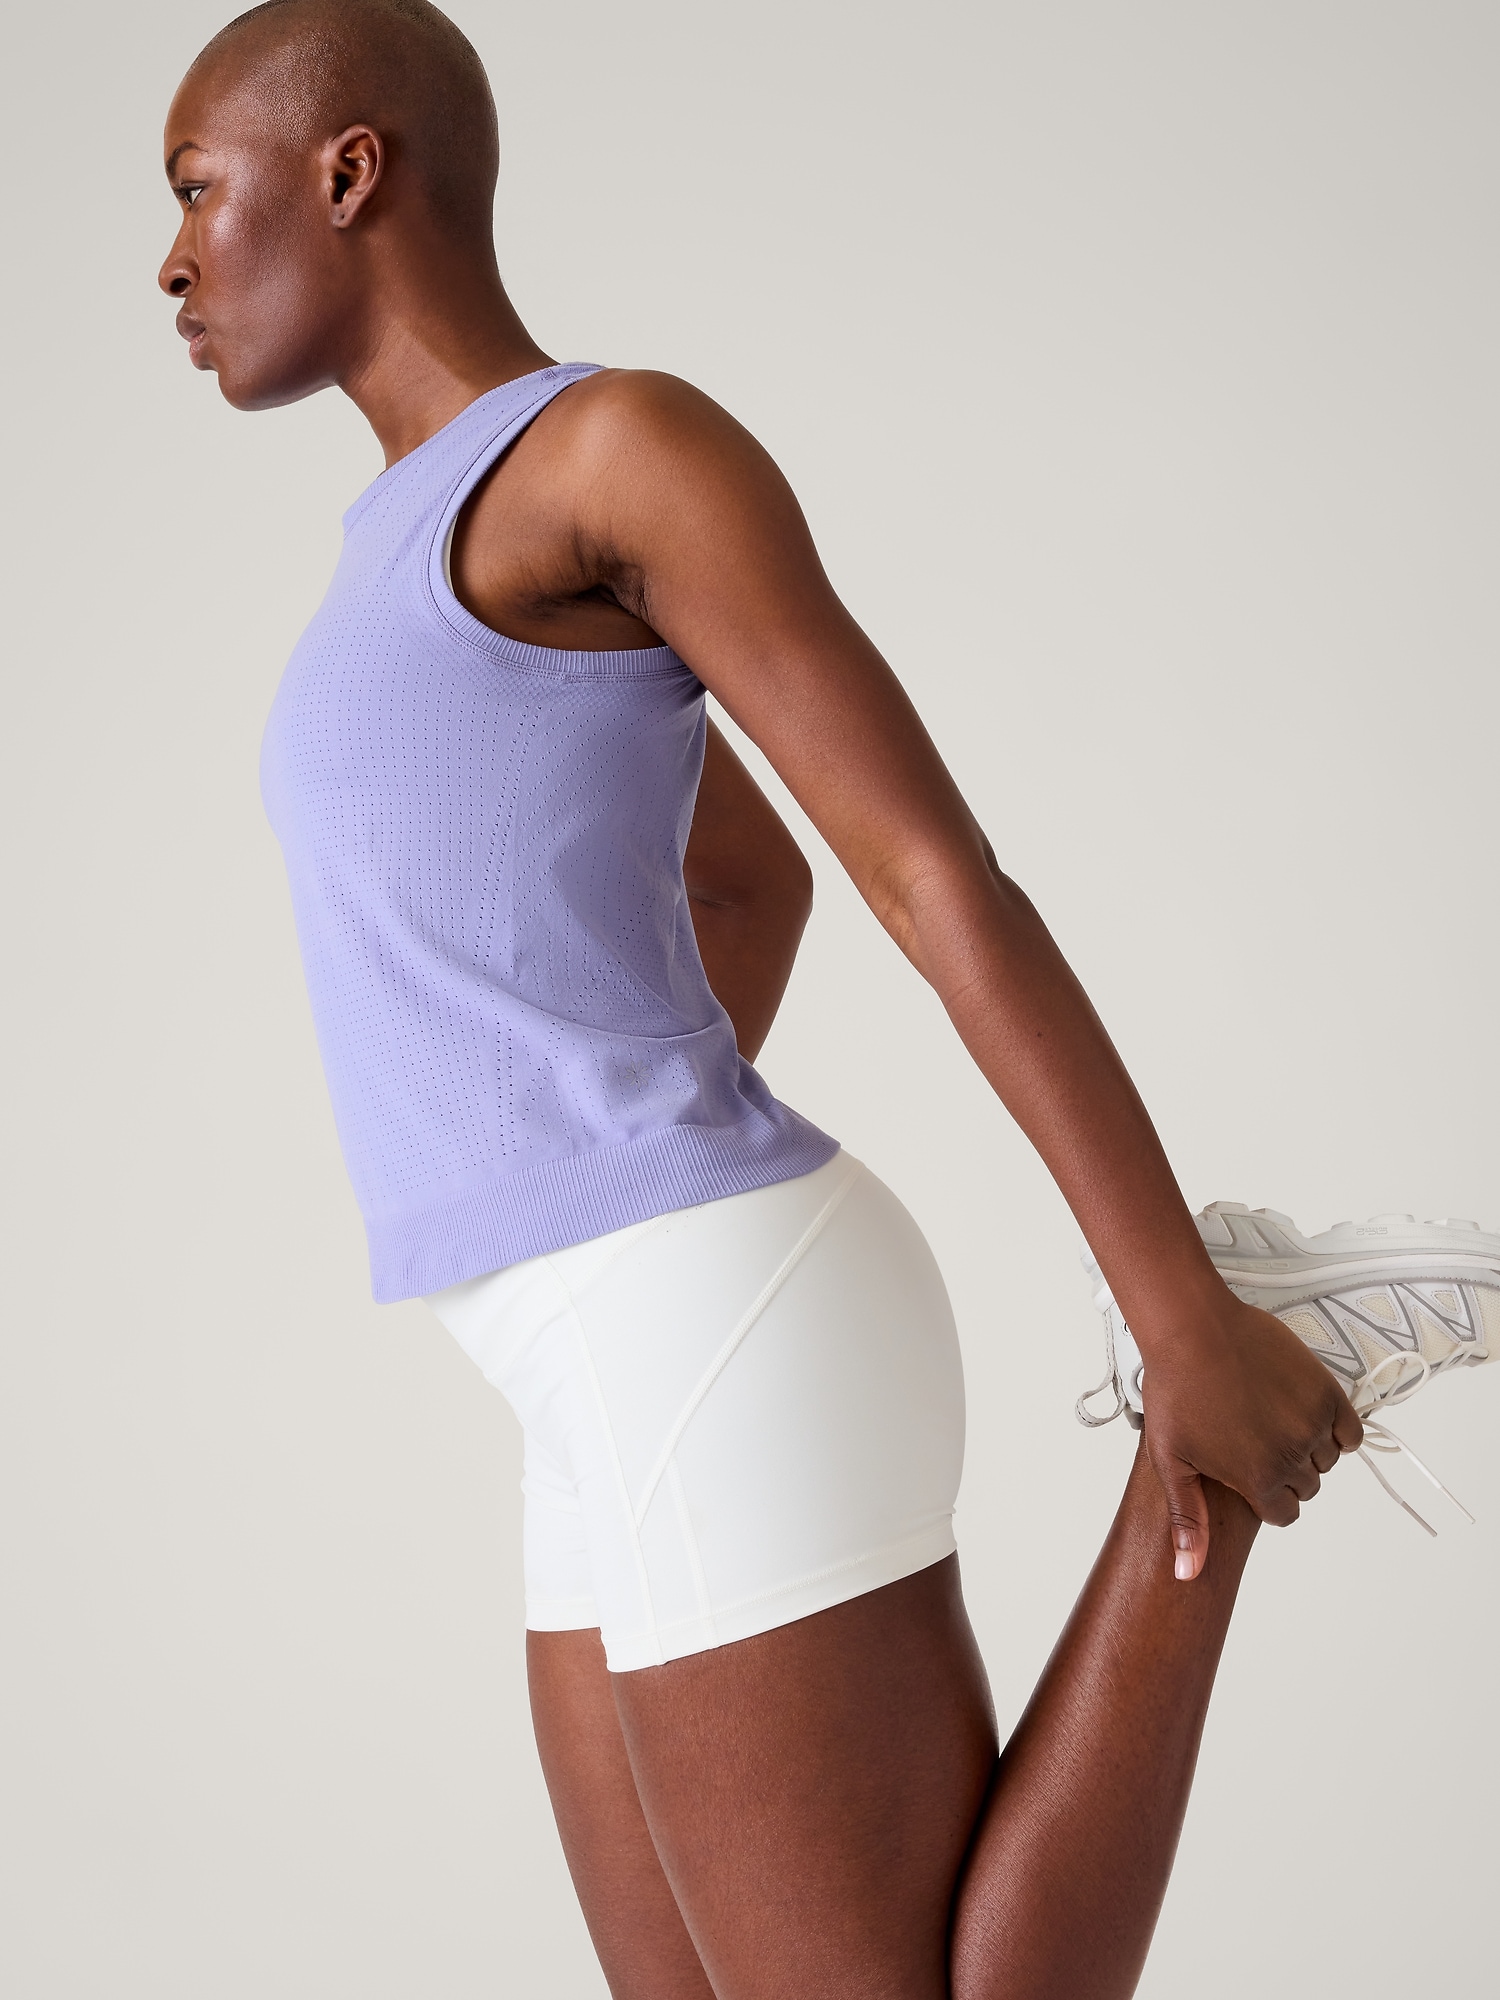 CINOON Seamless Tanks Tops Bras Set Female Underwear Wireless Bra